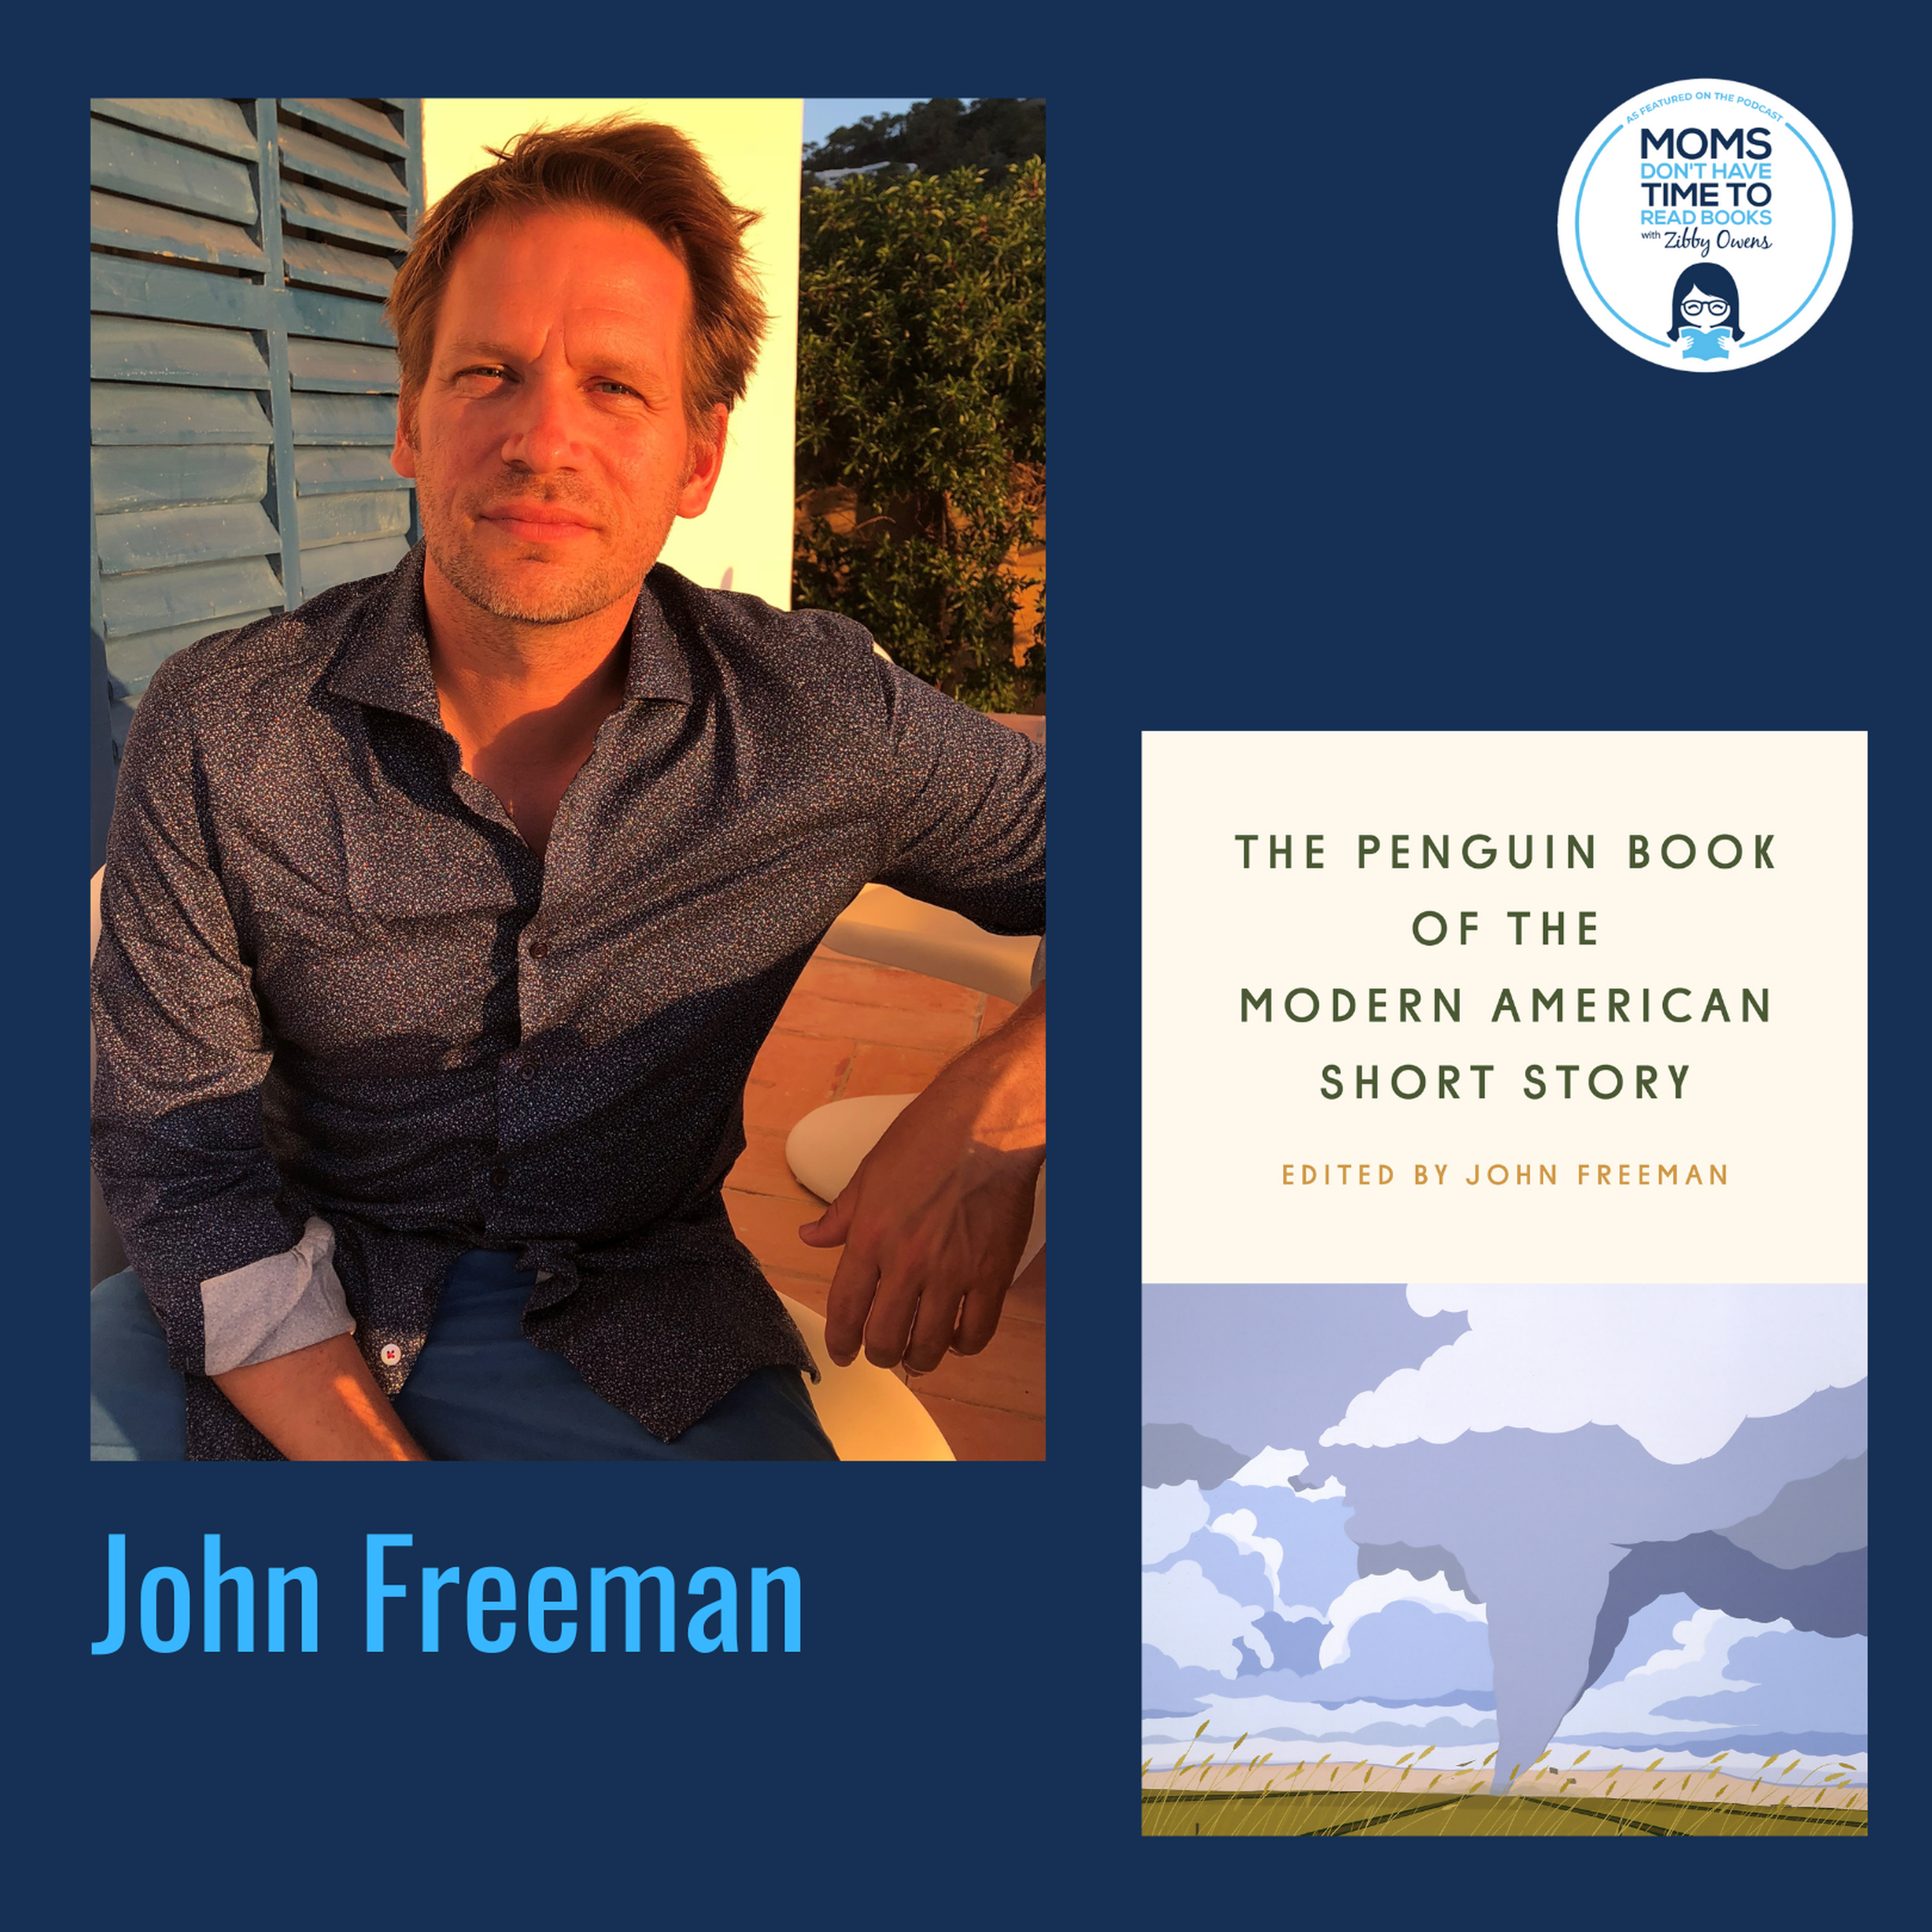 John Freeman, THE PENGUIN BOOK OF THE MODERN AMERICAN SHORT STORY